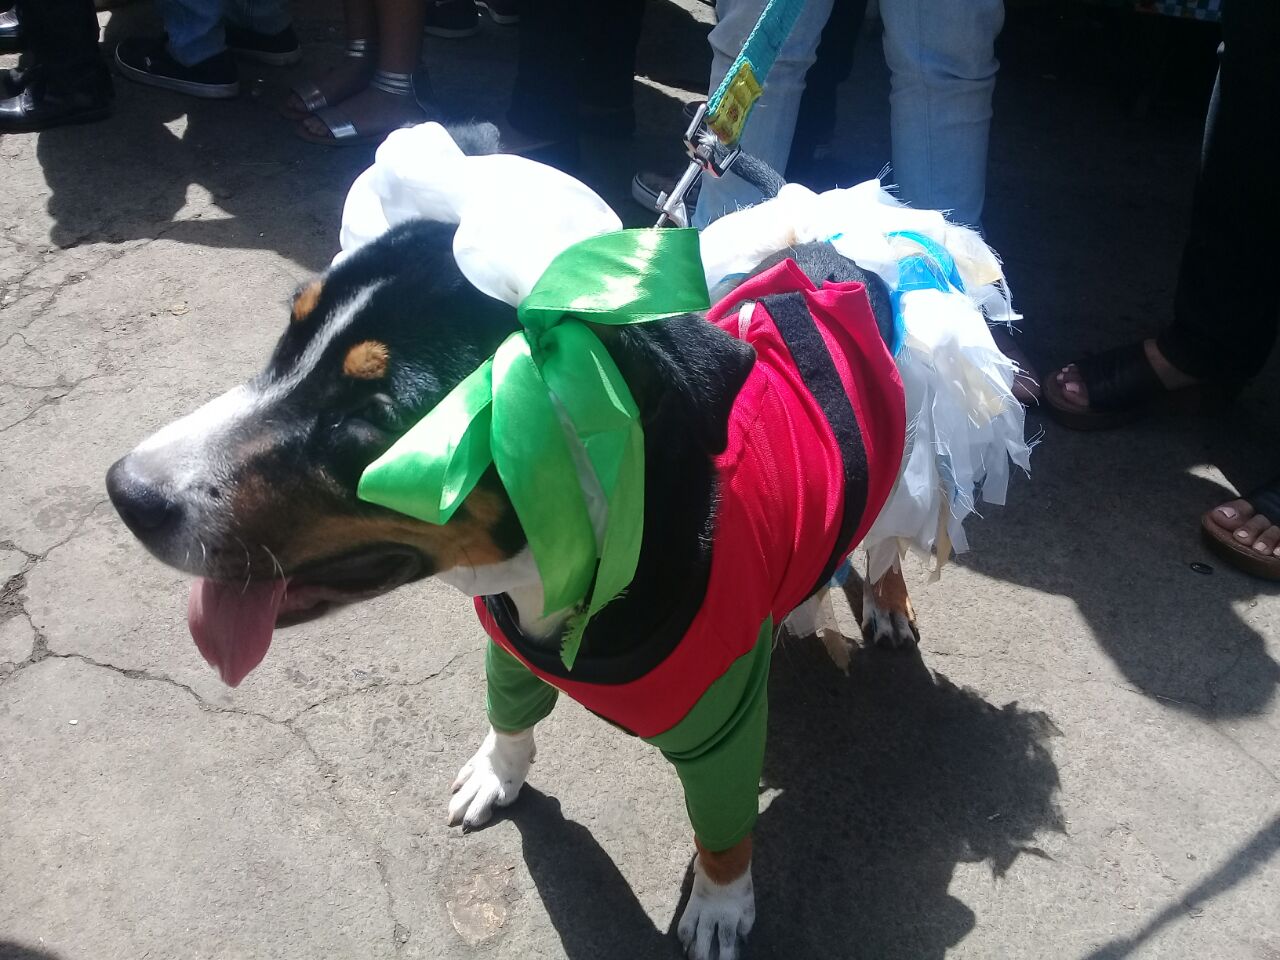 Inicia desfile de perritos en honor a San Lazaro